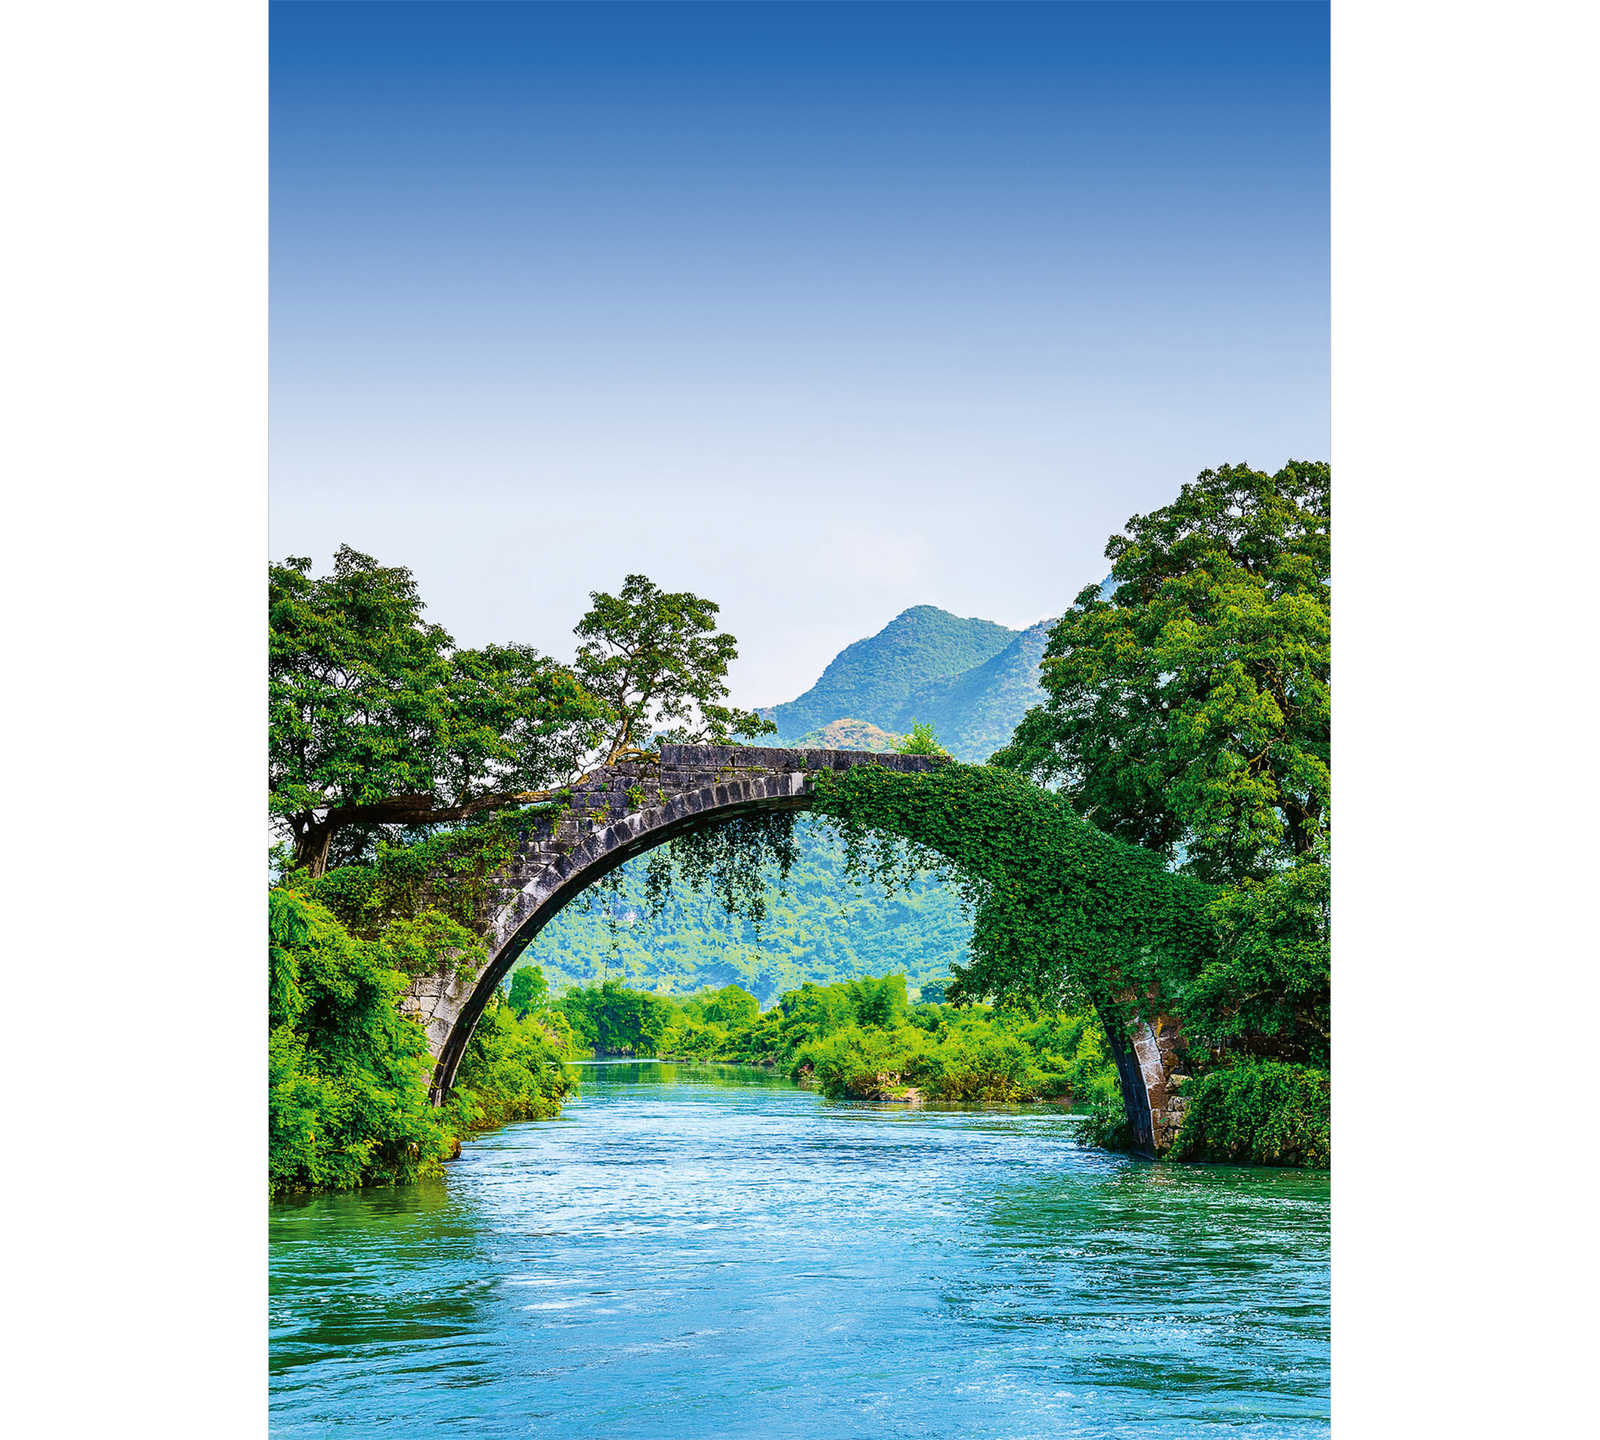         Photo wallpaper asian river landscape with bridge
    